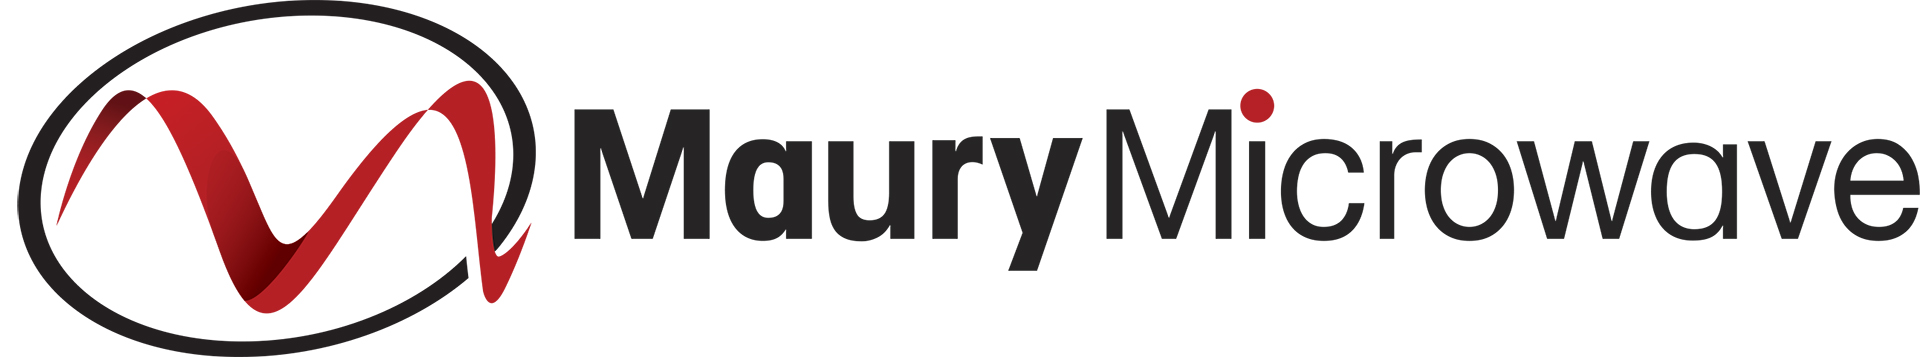 maury microwave_logo